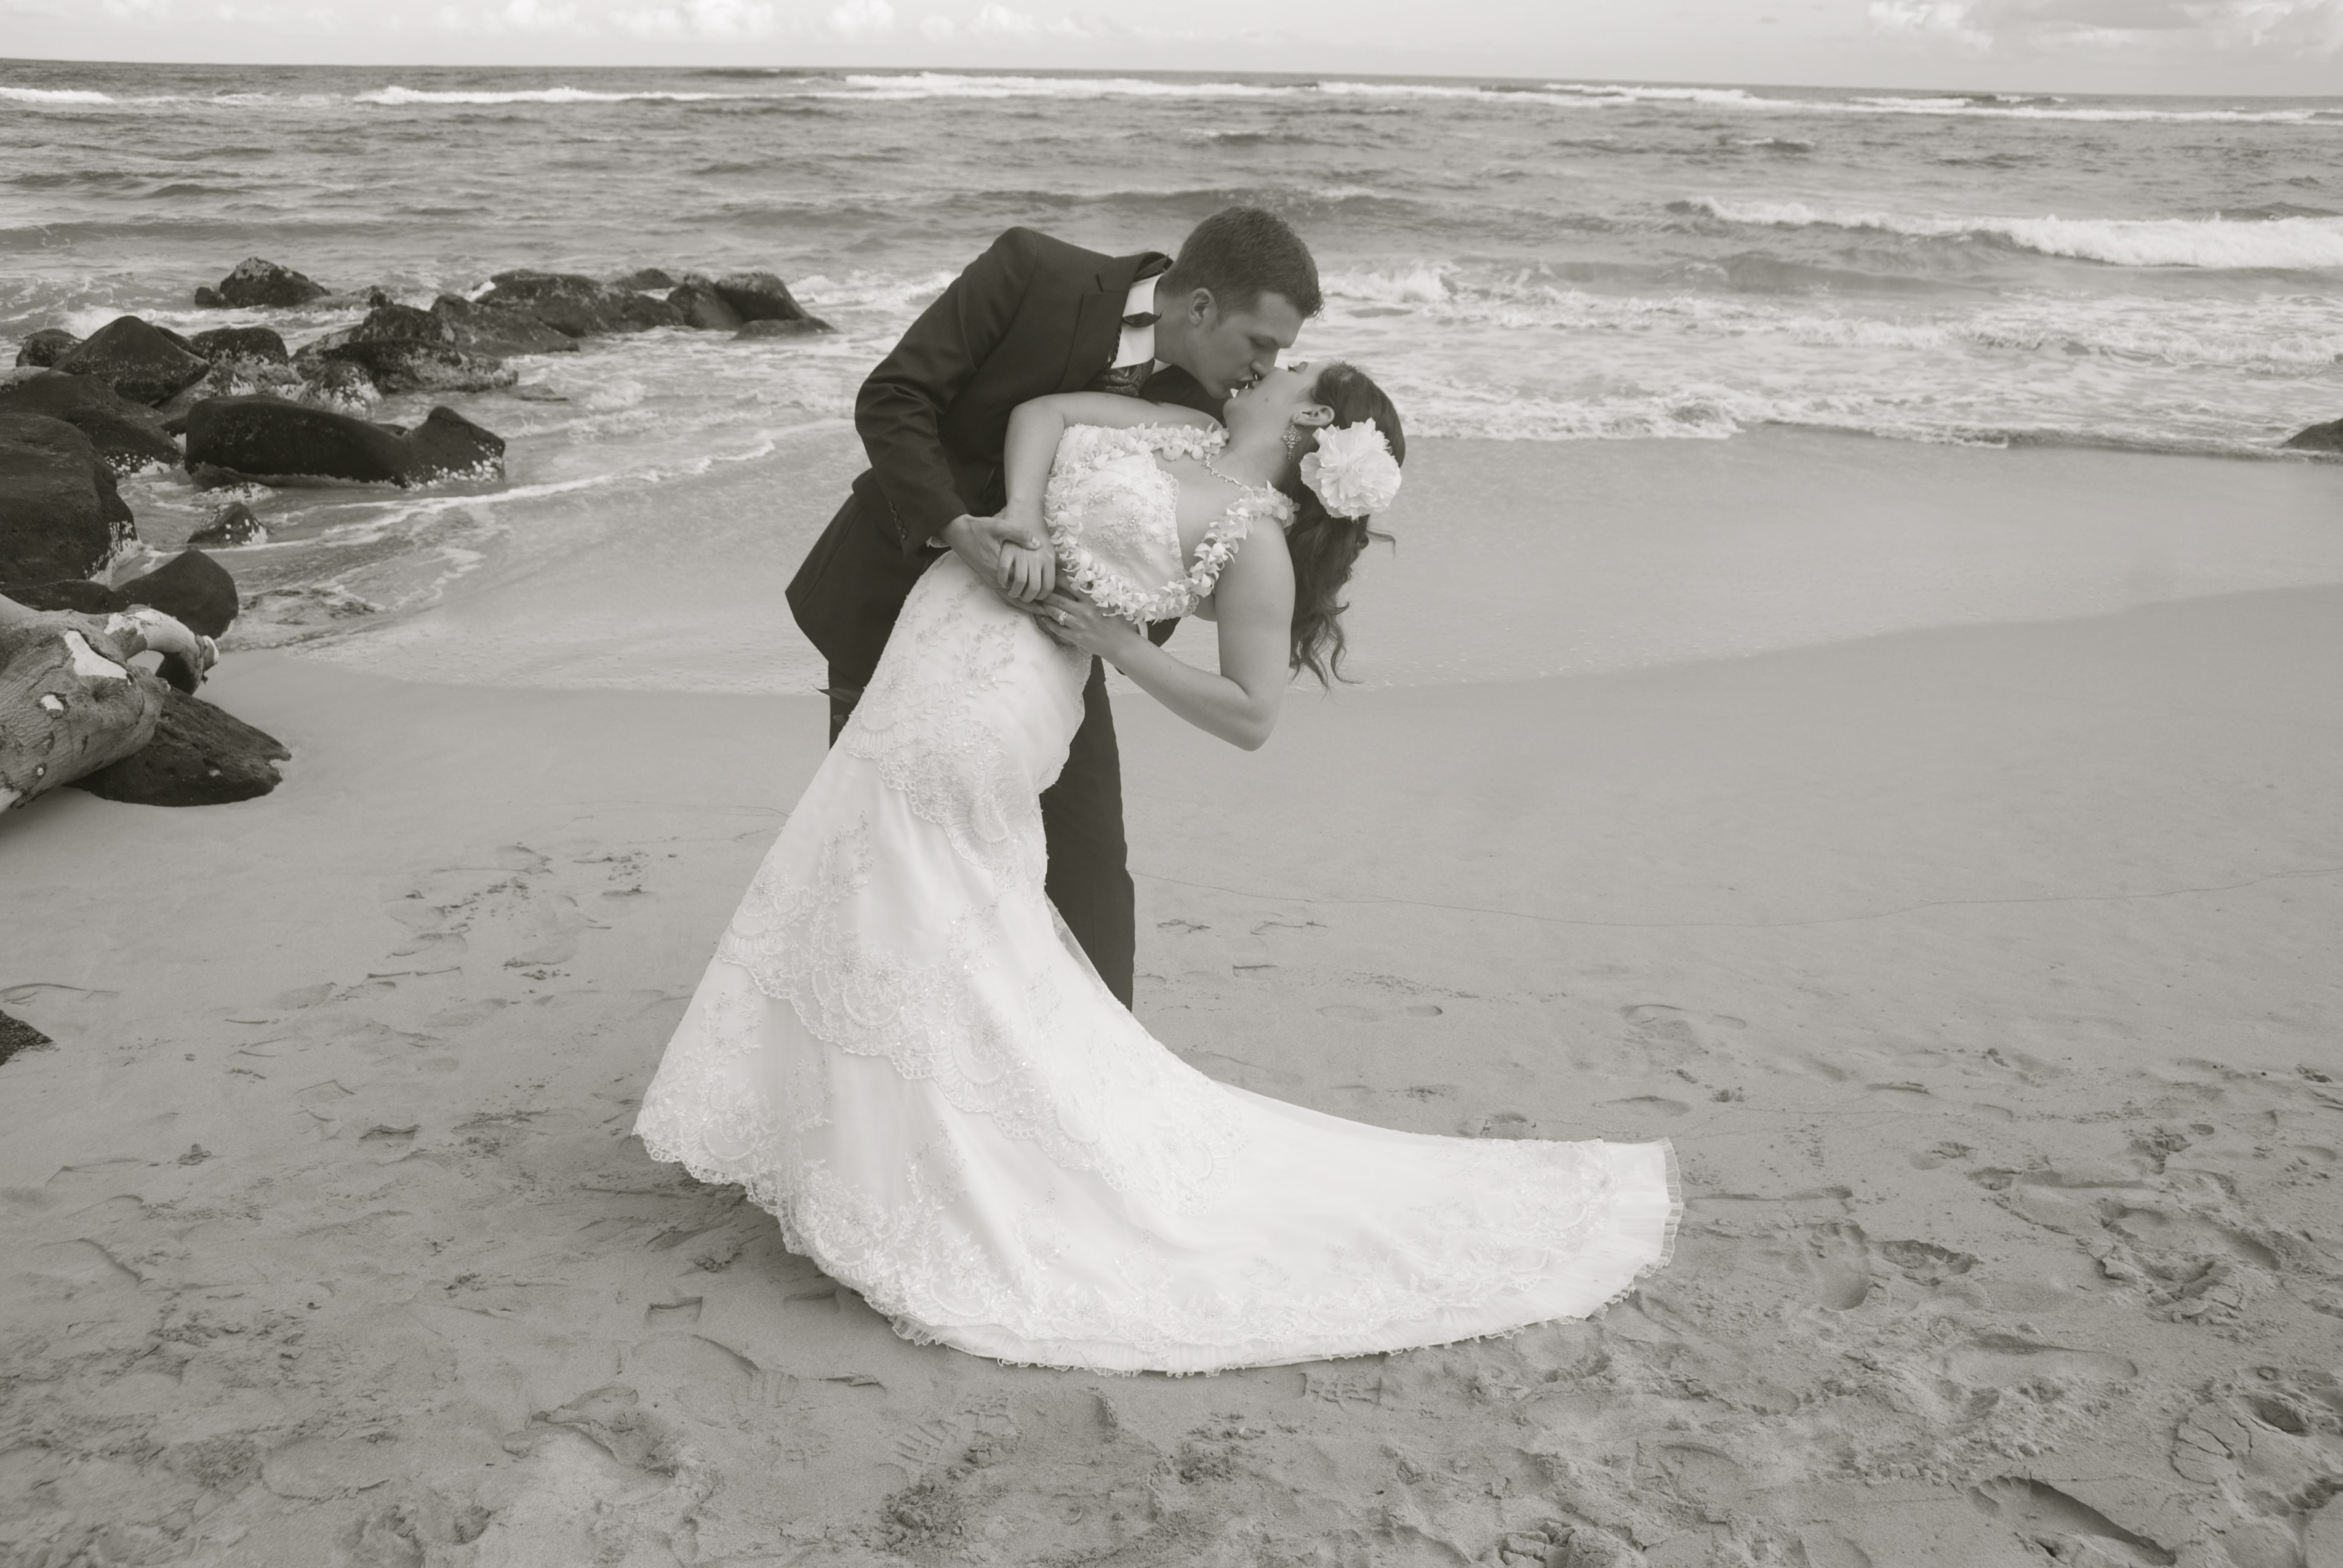 Kauai private beach wedding